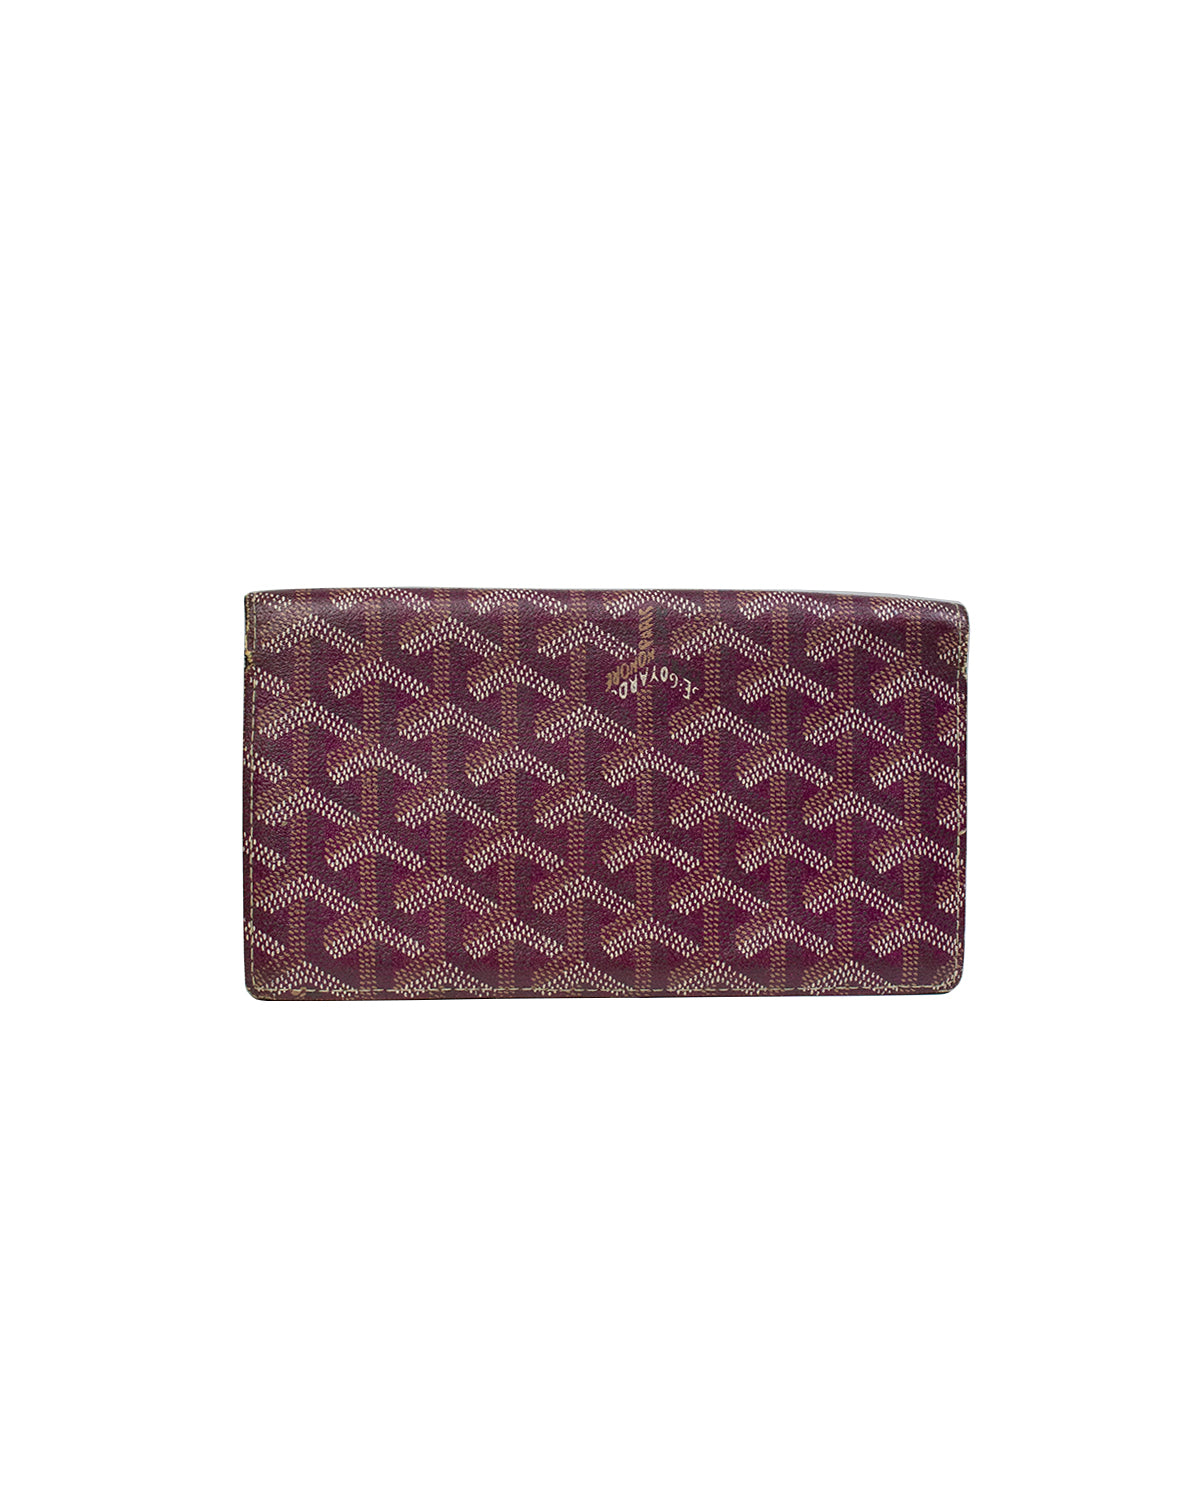 Goyard wallet from queenieluxury : r/DesignerReps